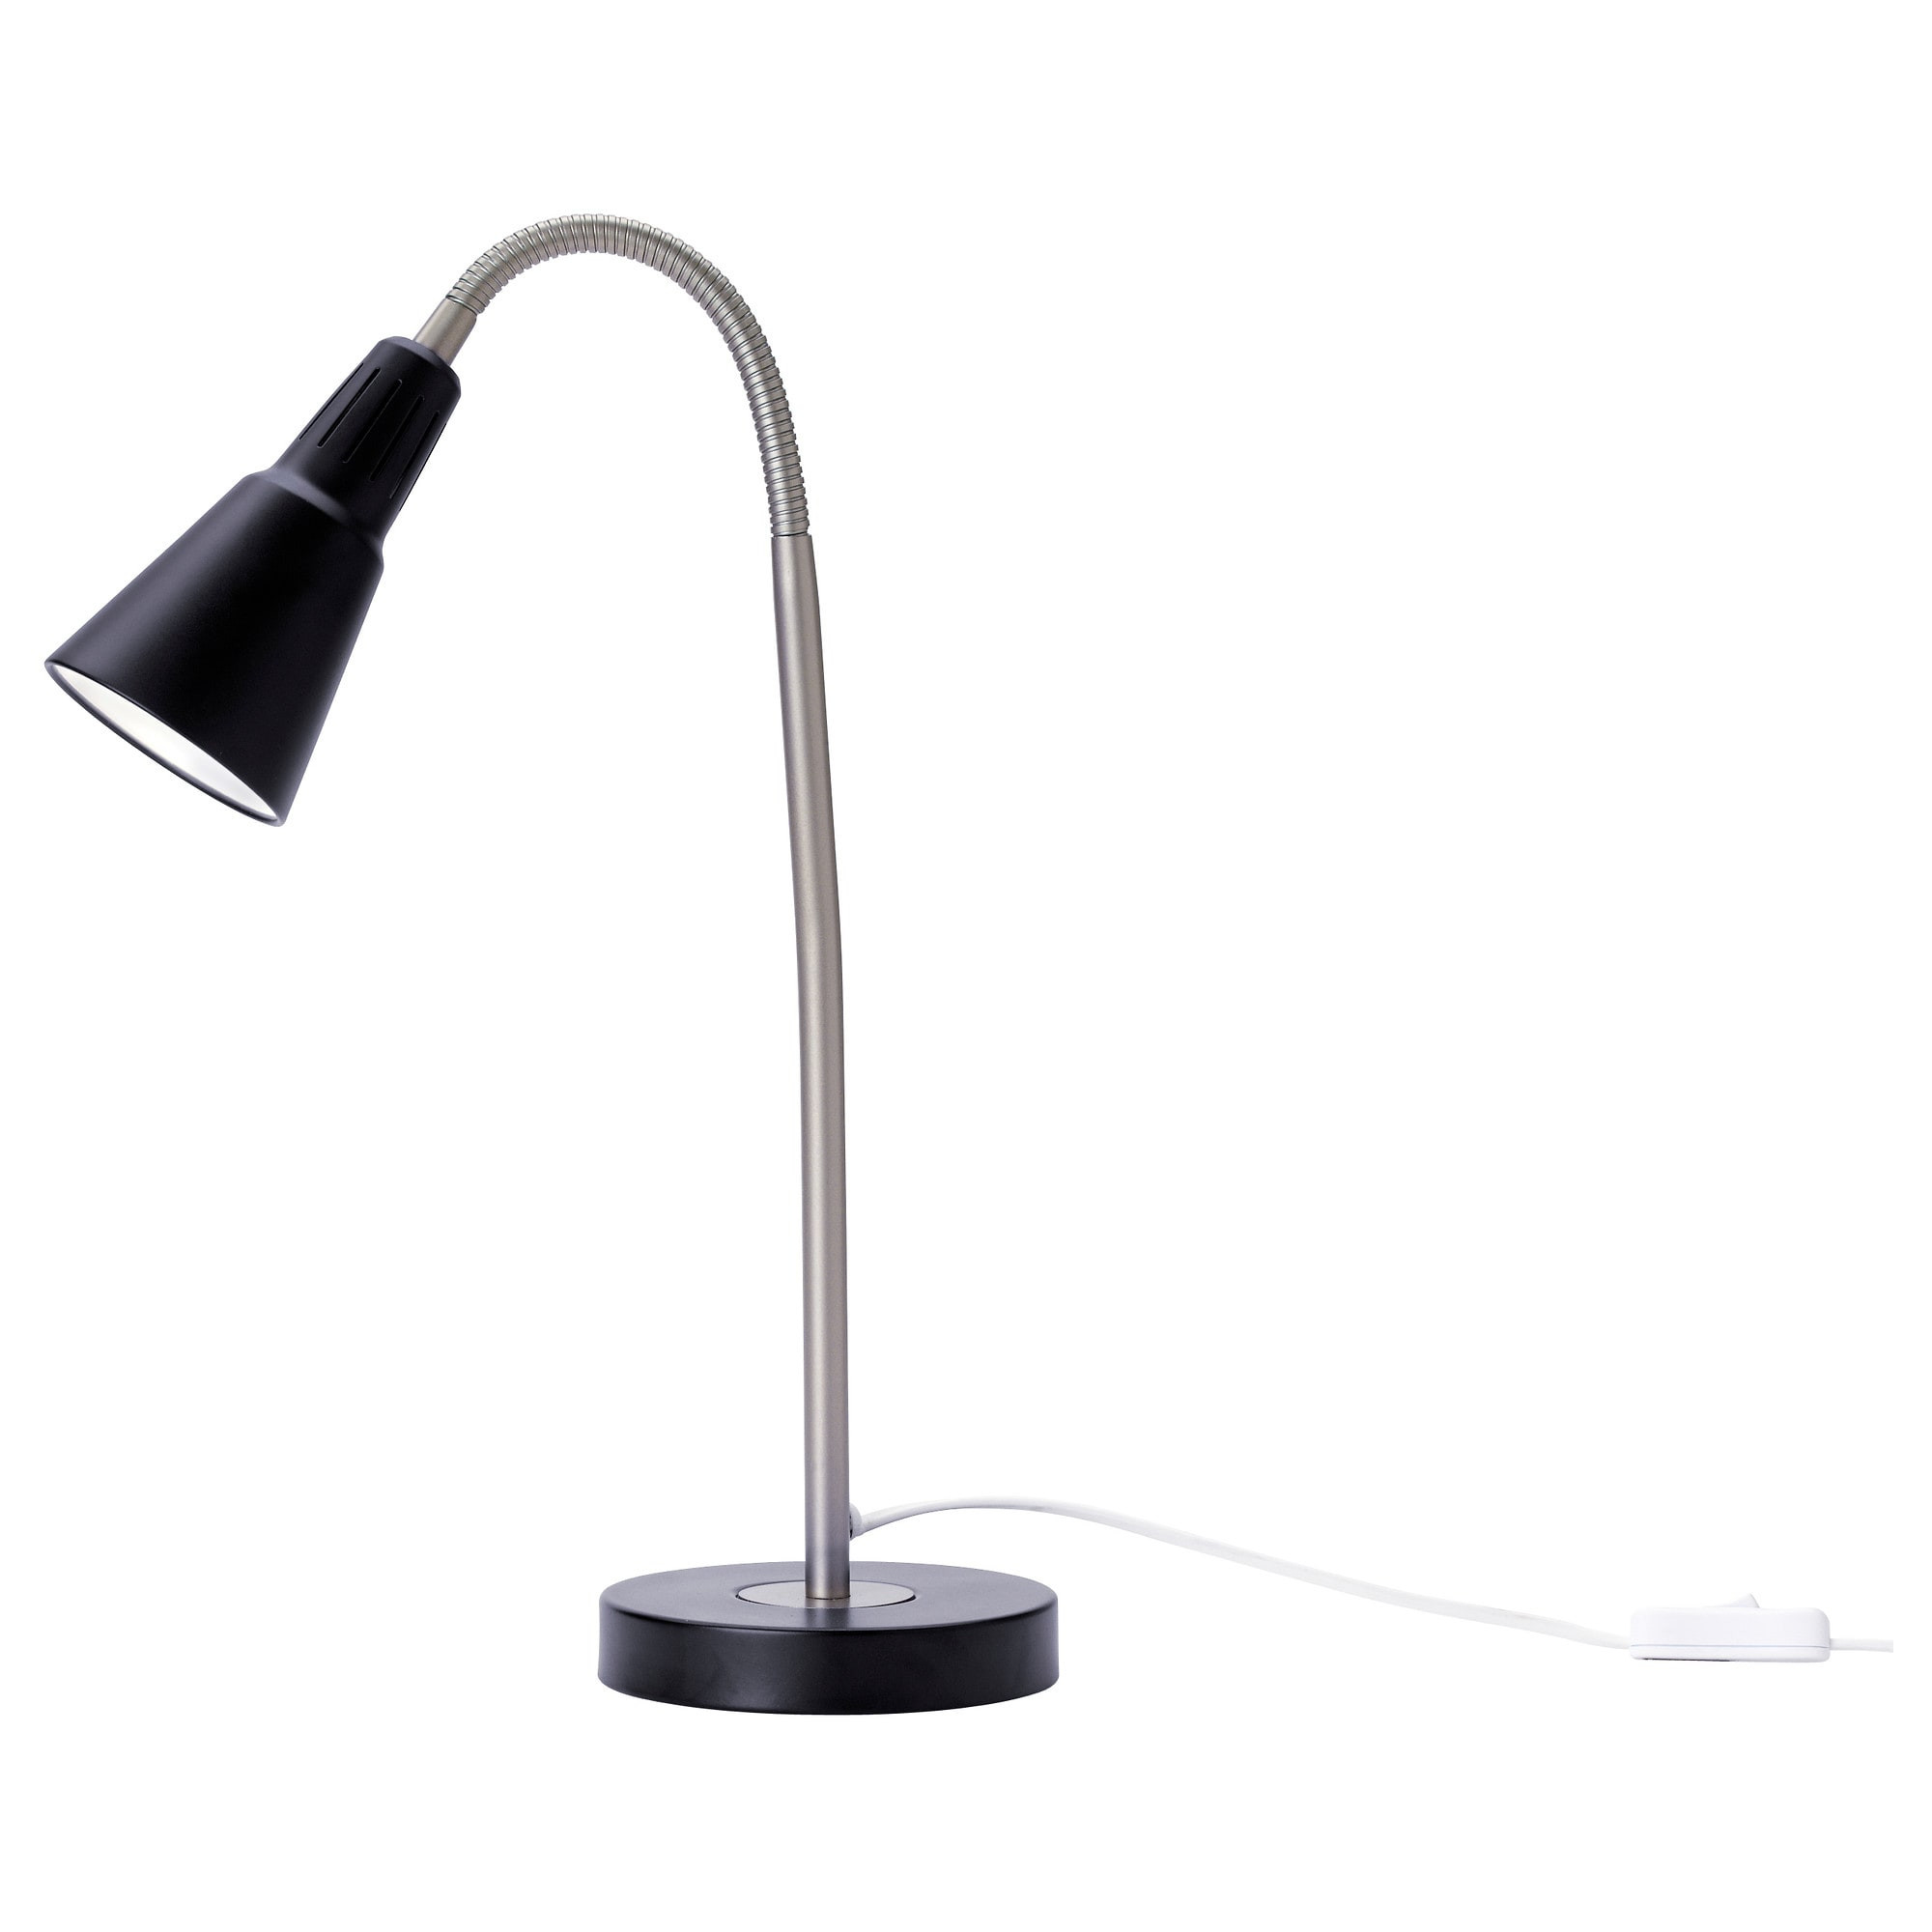 Best ideas about Desk Lamp Ikea
. Save or Pin KVART Work lamp Black IKEA Now.